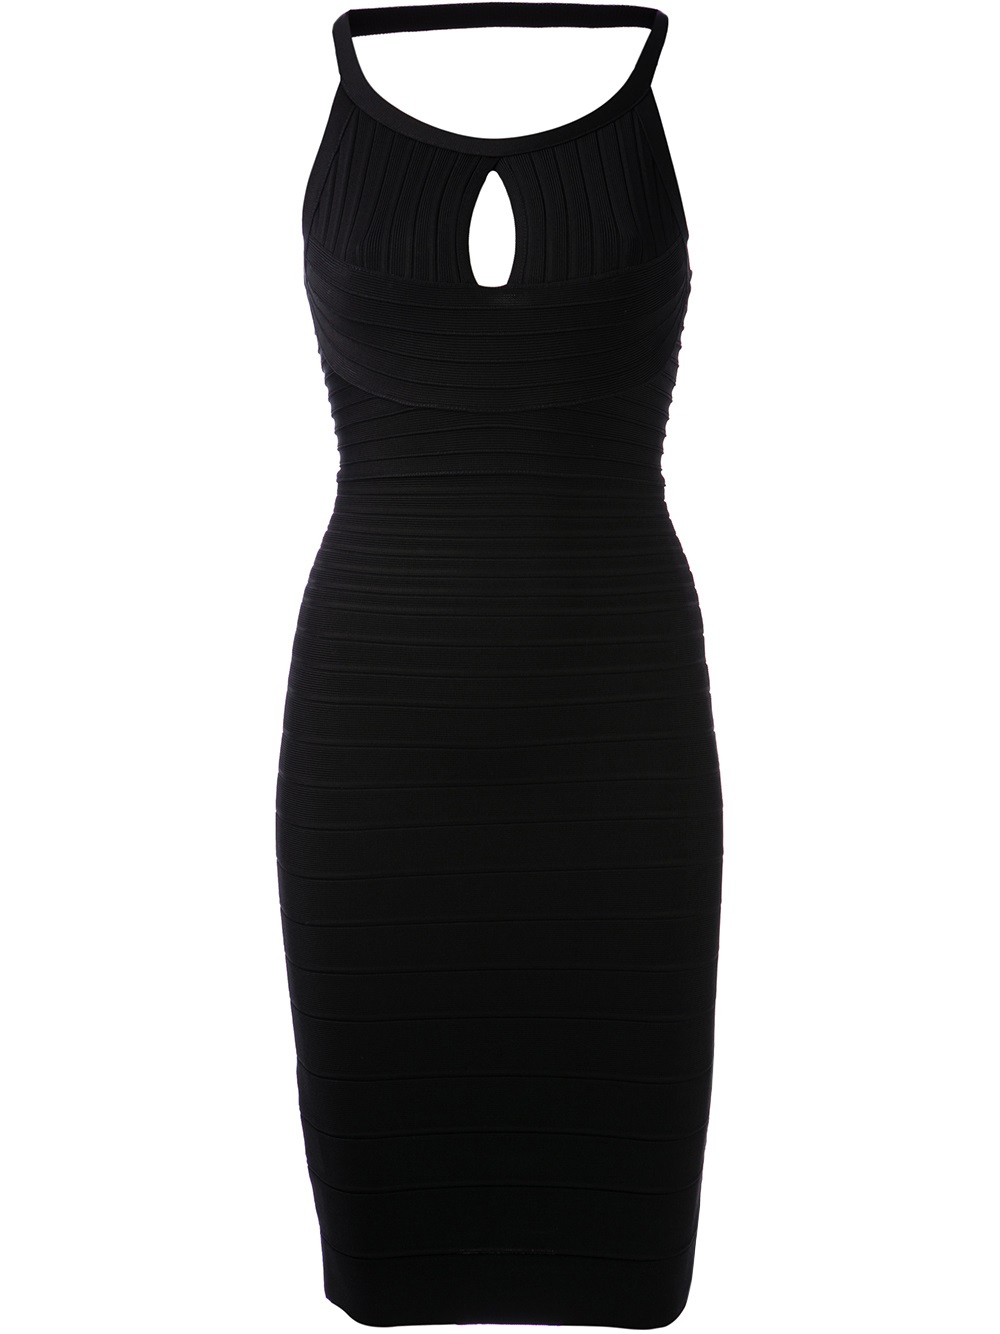 Lyst - Hervé léger Keyhole Bandage Dress in Black